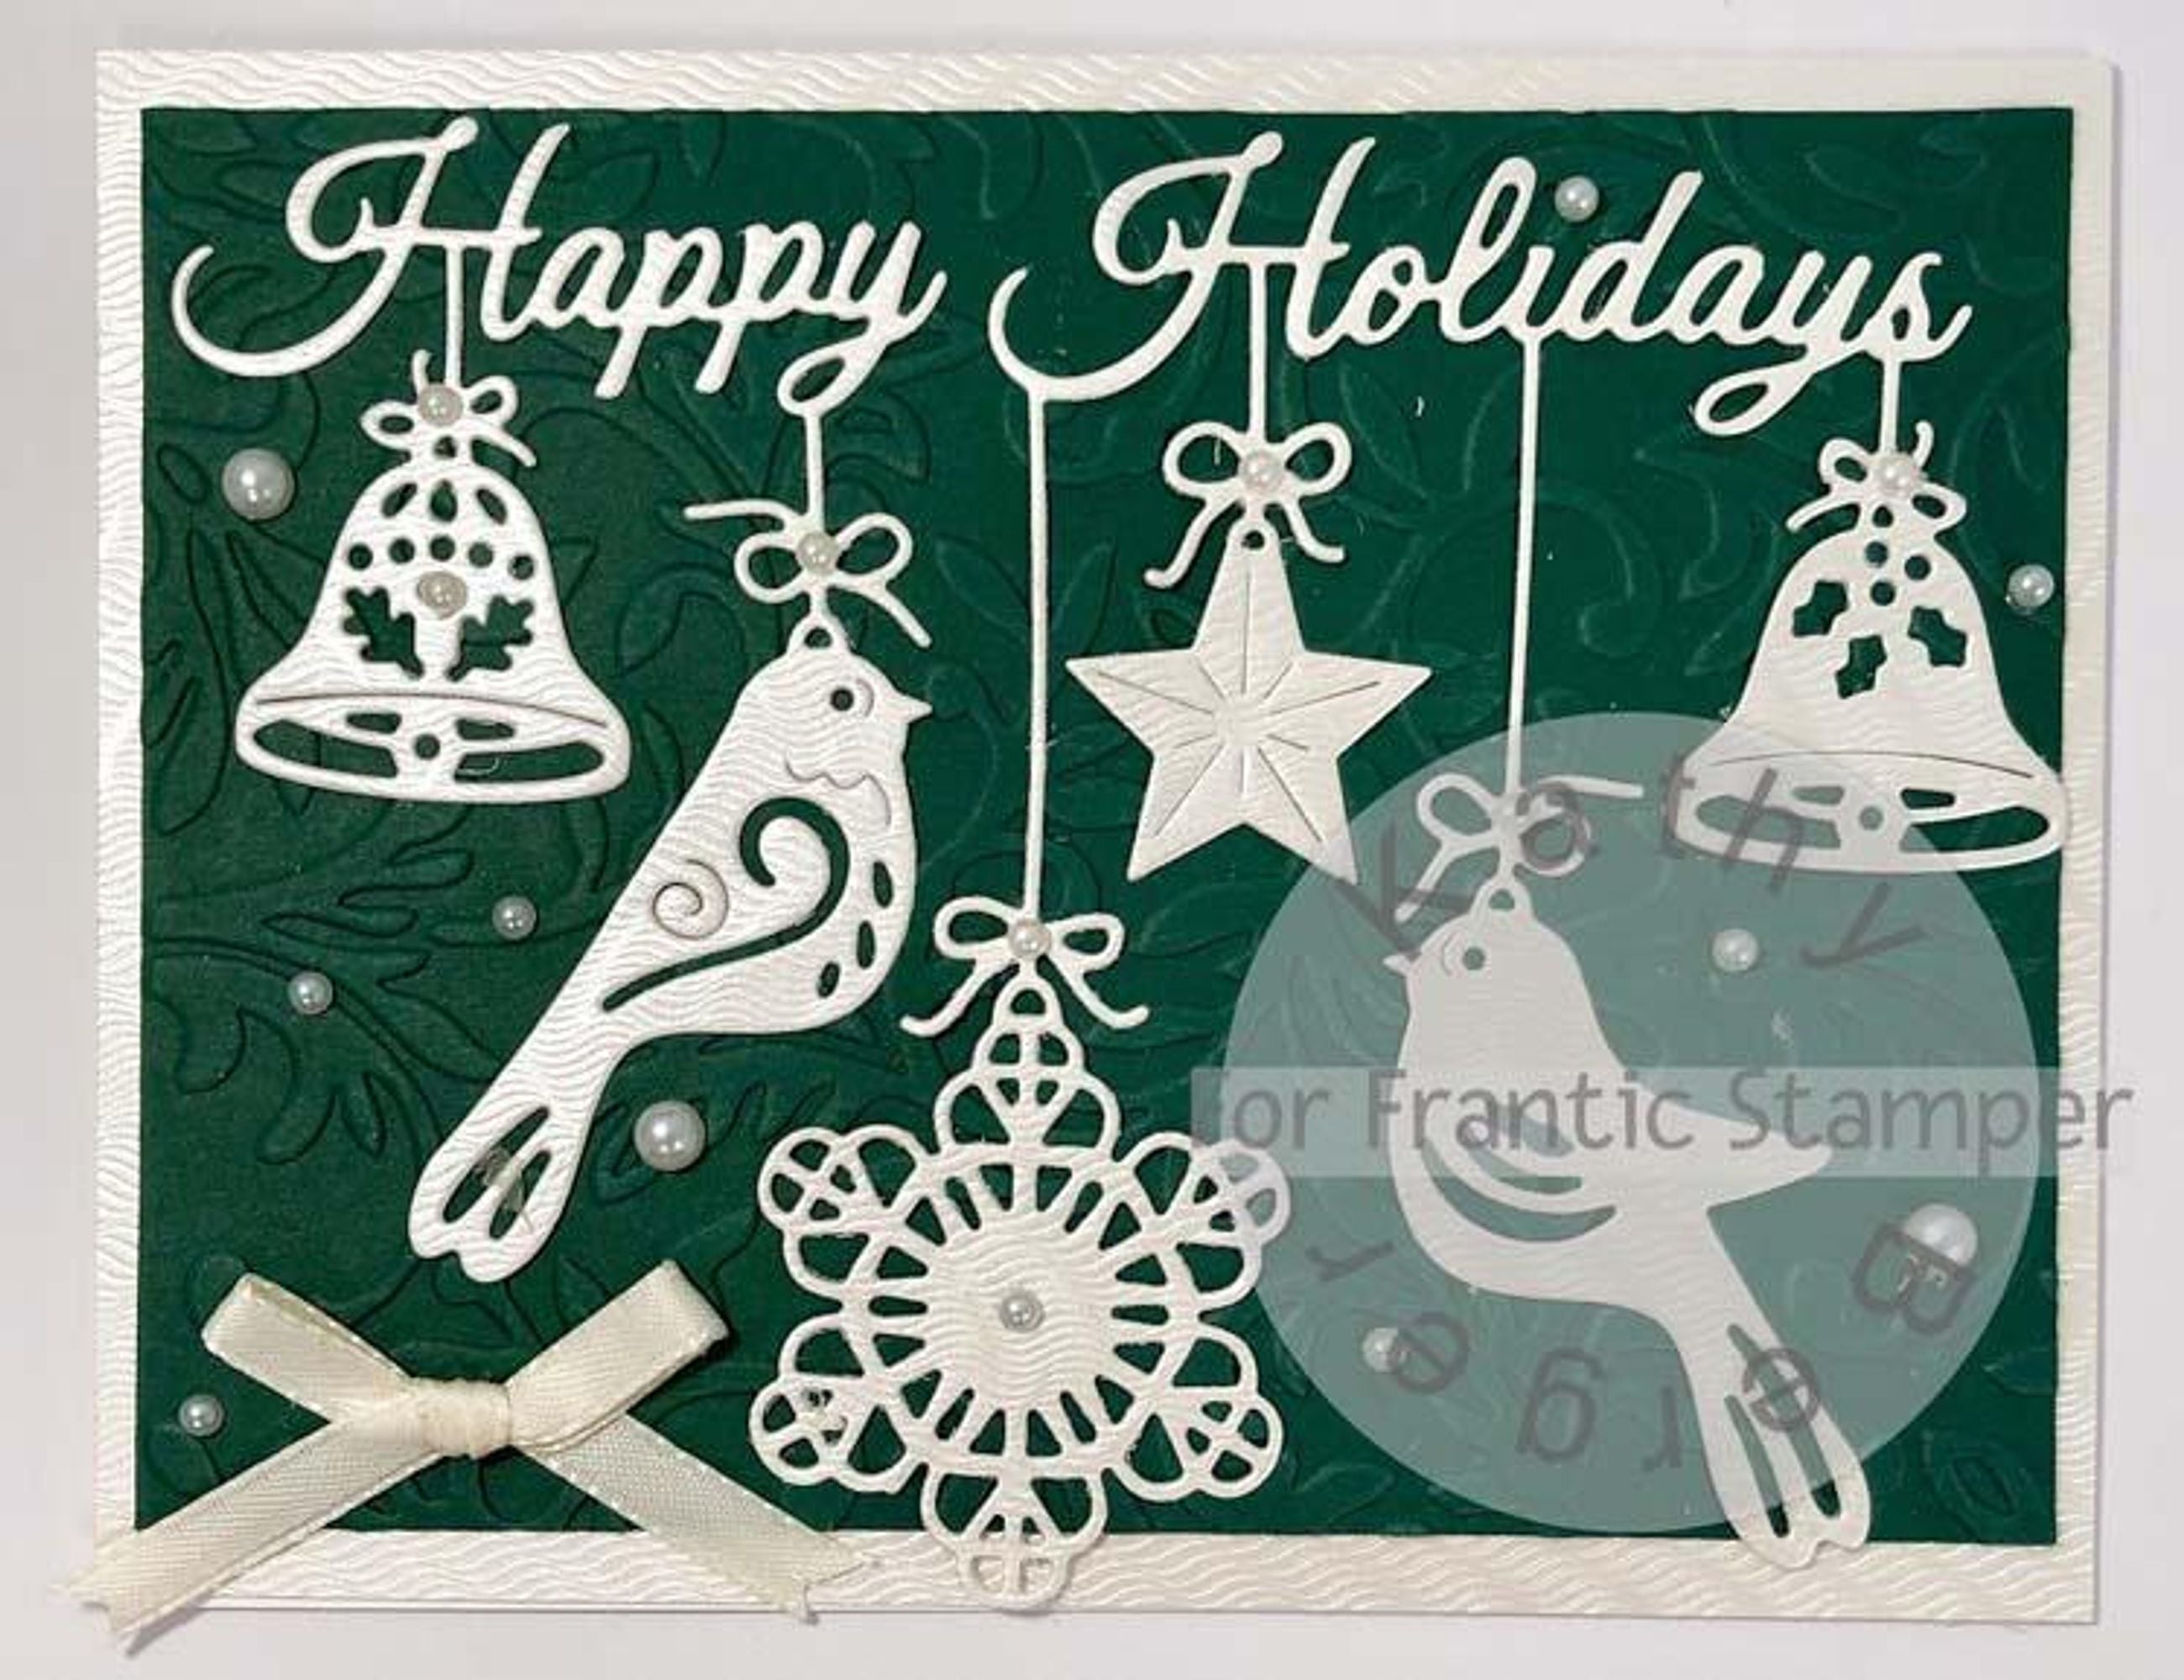 Frantic Stamper Precision Die - Folk Art Happy Holidays